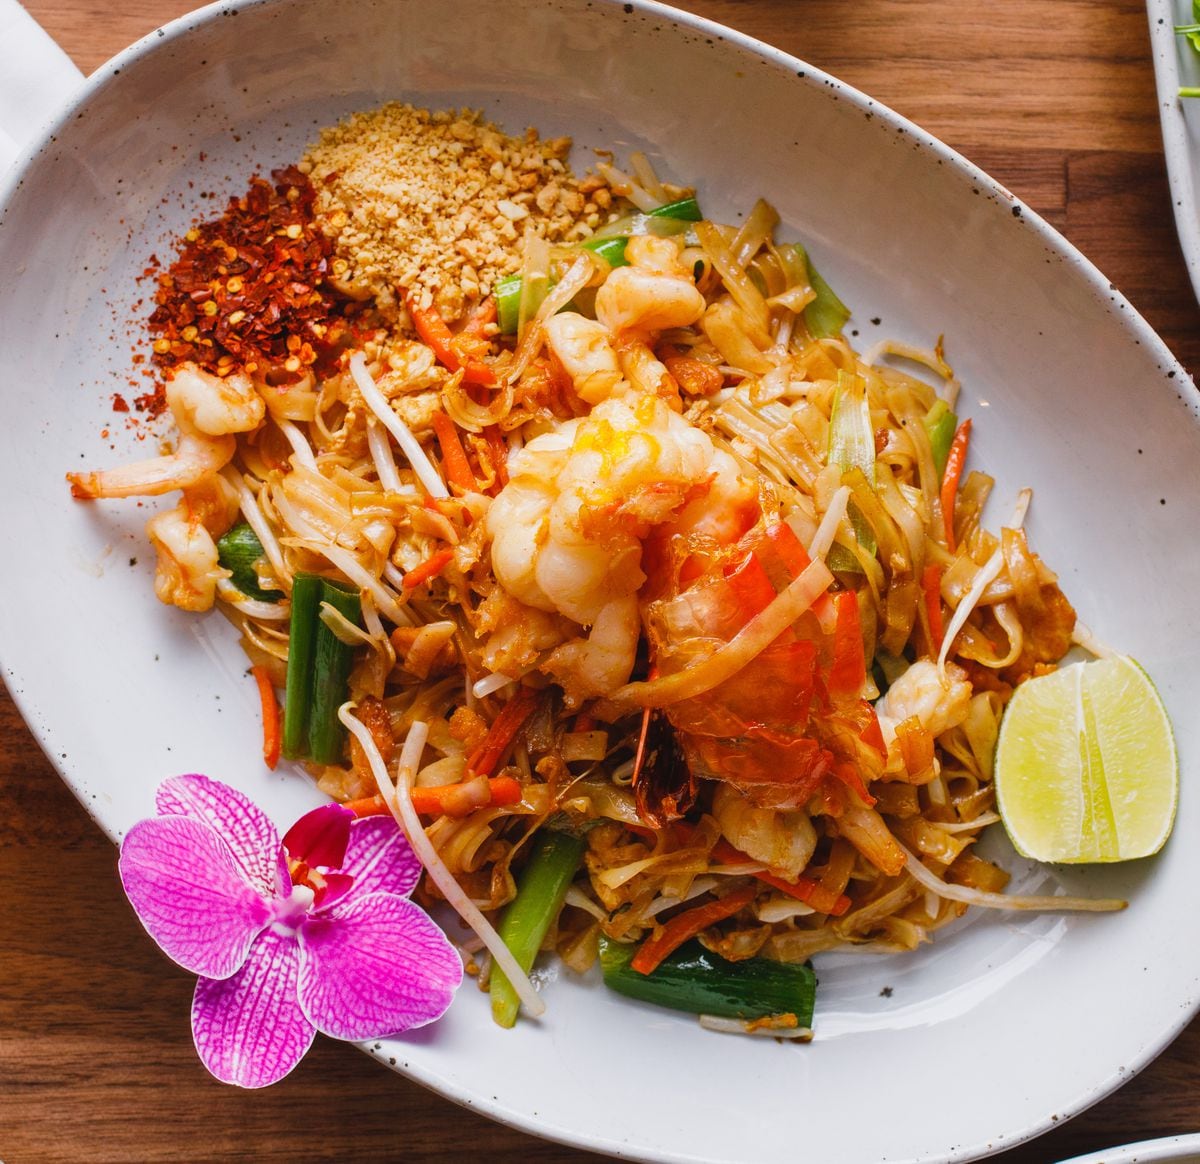 Taste of Thailand: Tuck into a feast